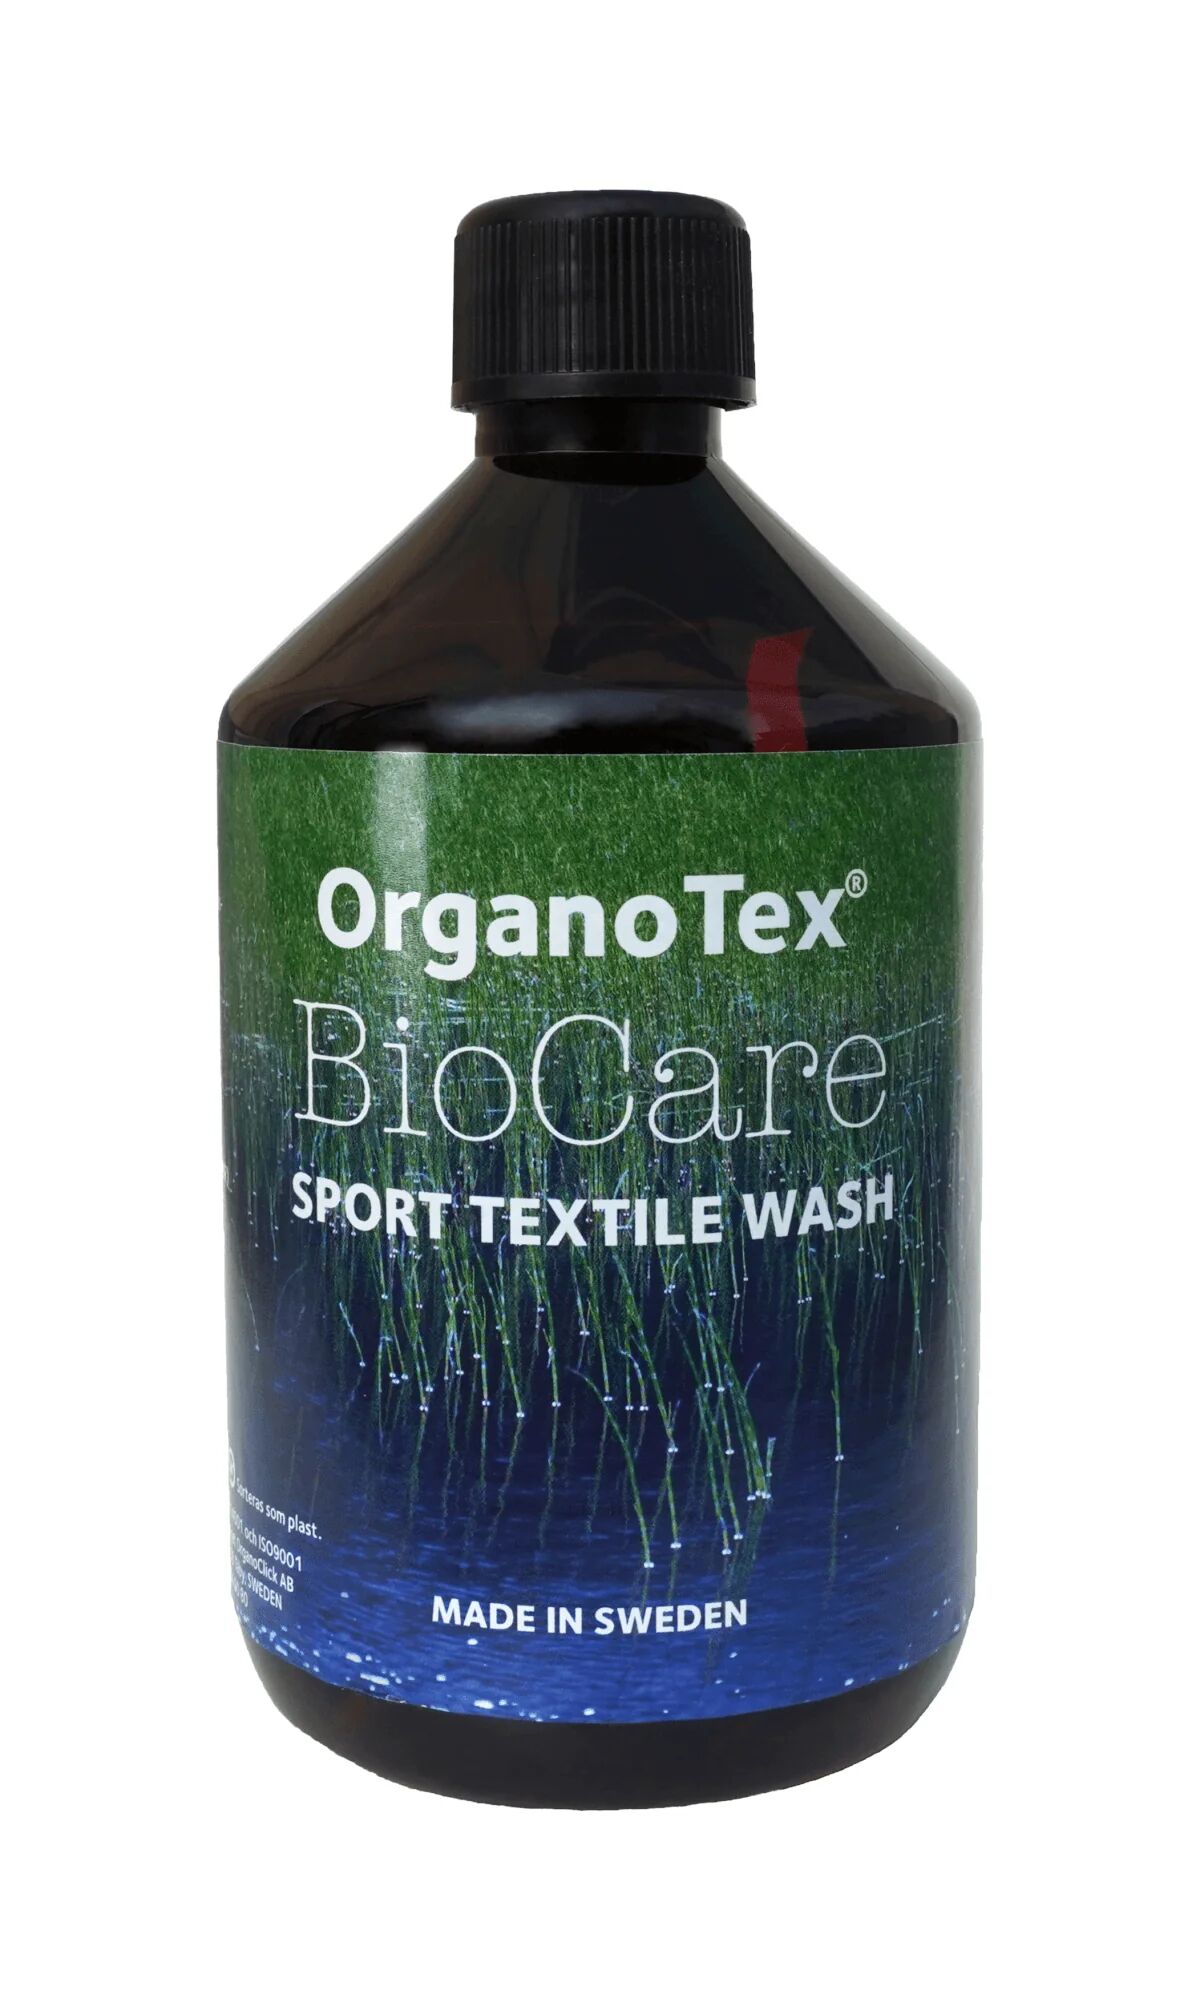 OrganoTex BioCare Sport Textile Wash - Biobased detergent, 100ml